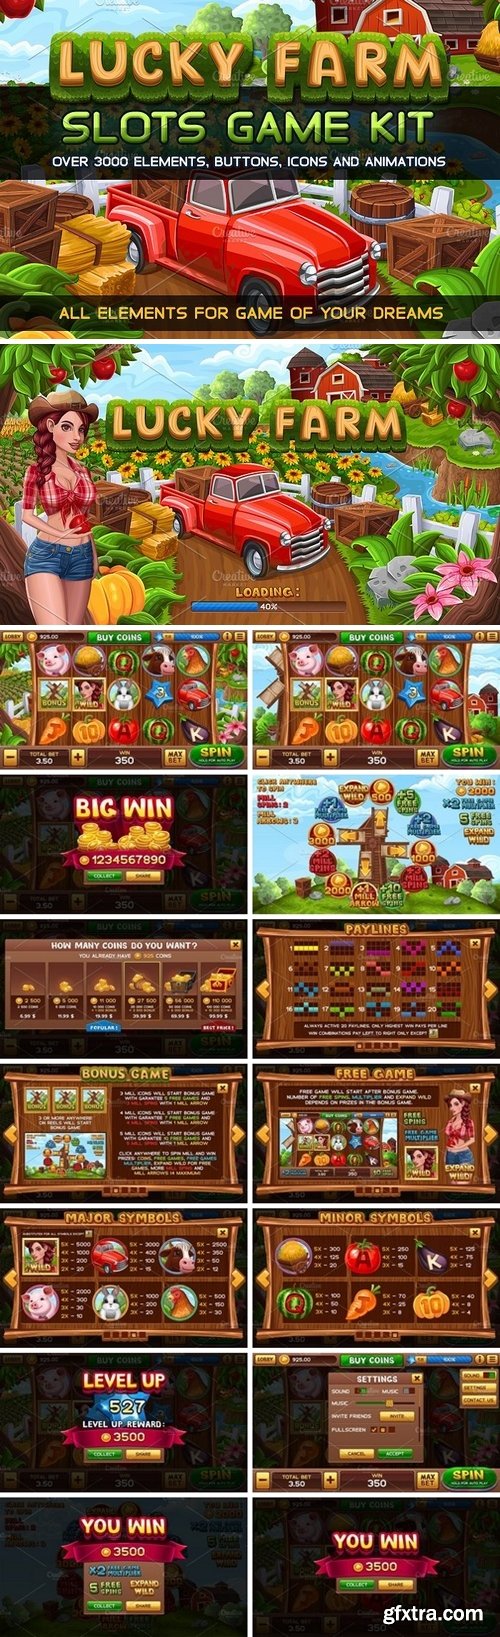 CM - Lucky Farm Slots Game KIT 1569915